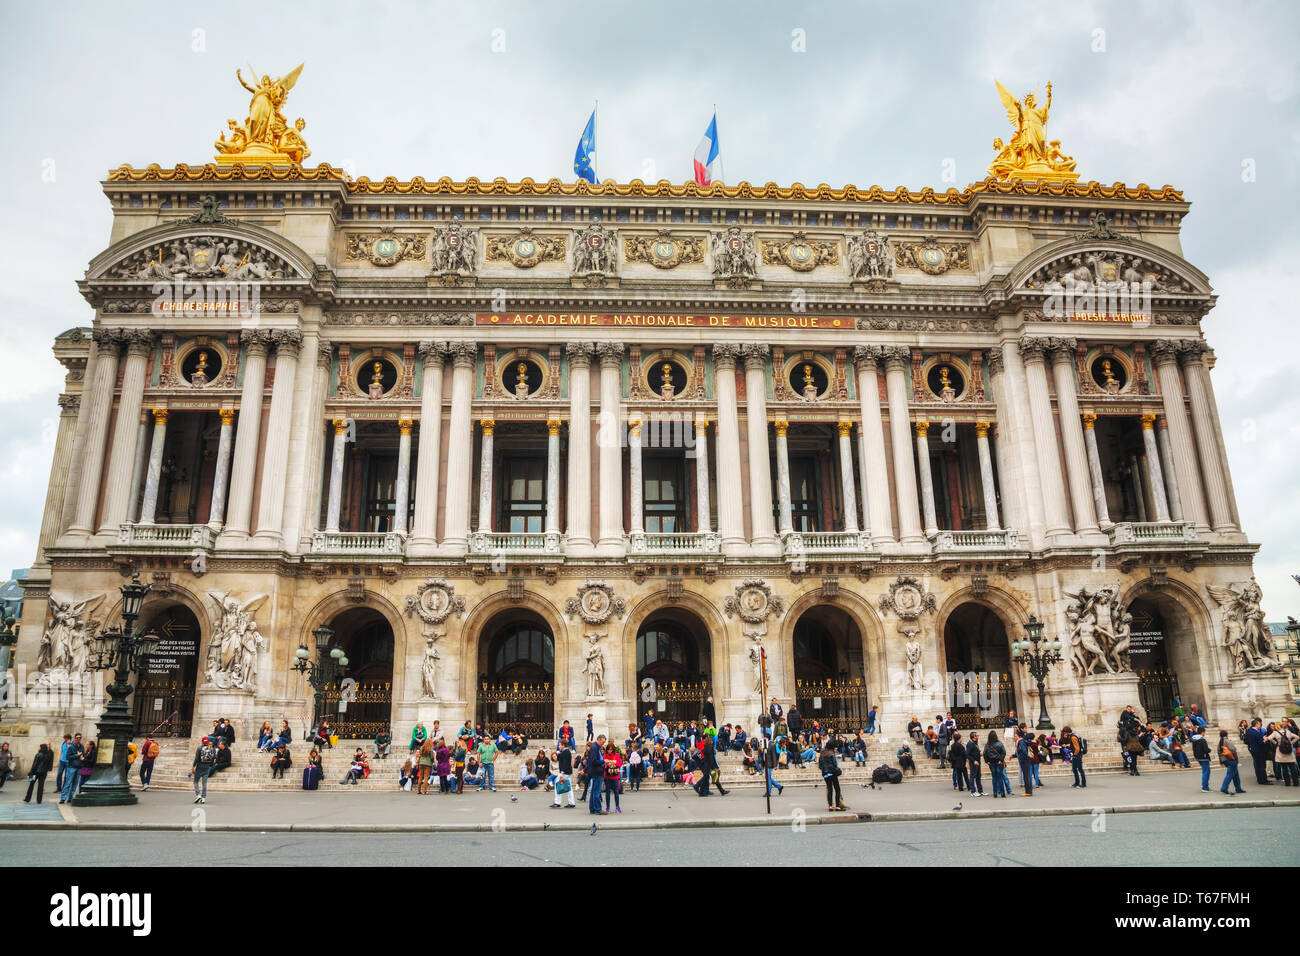 The Palais Garnier (National Opera House) in Paris, France Stock Photo